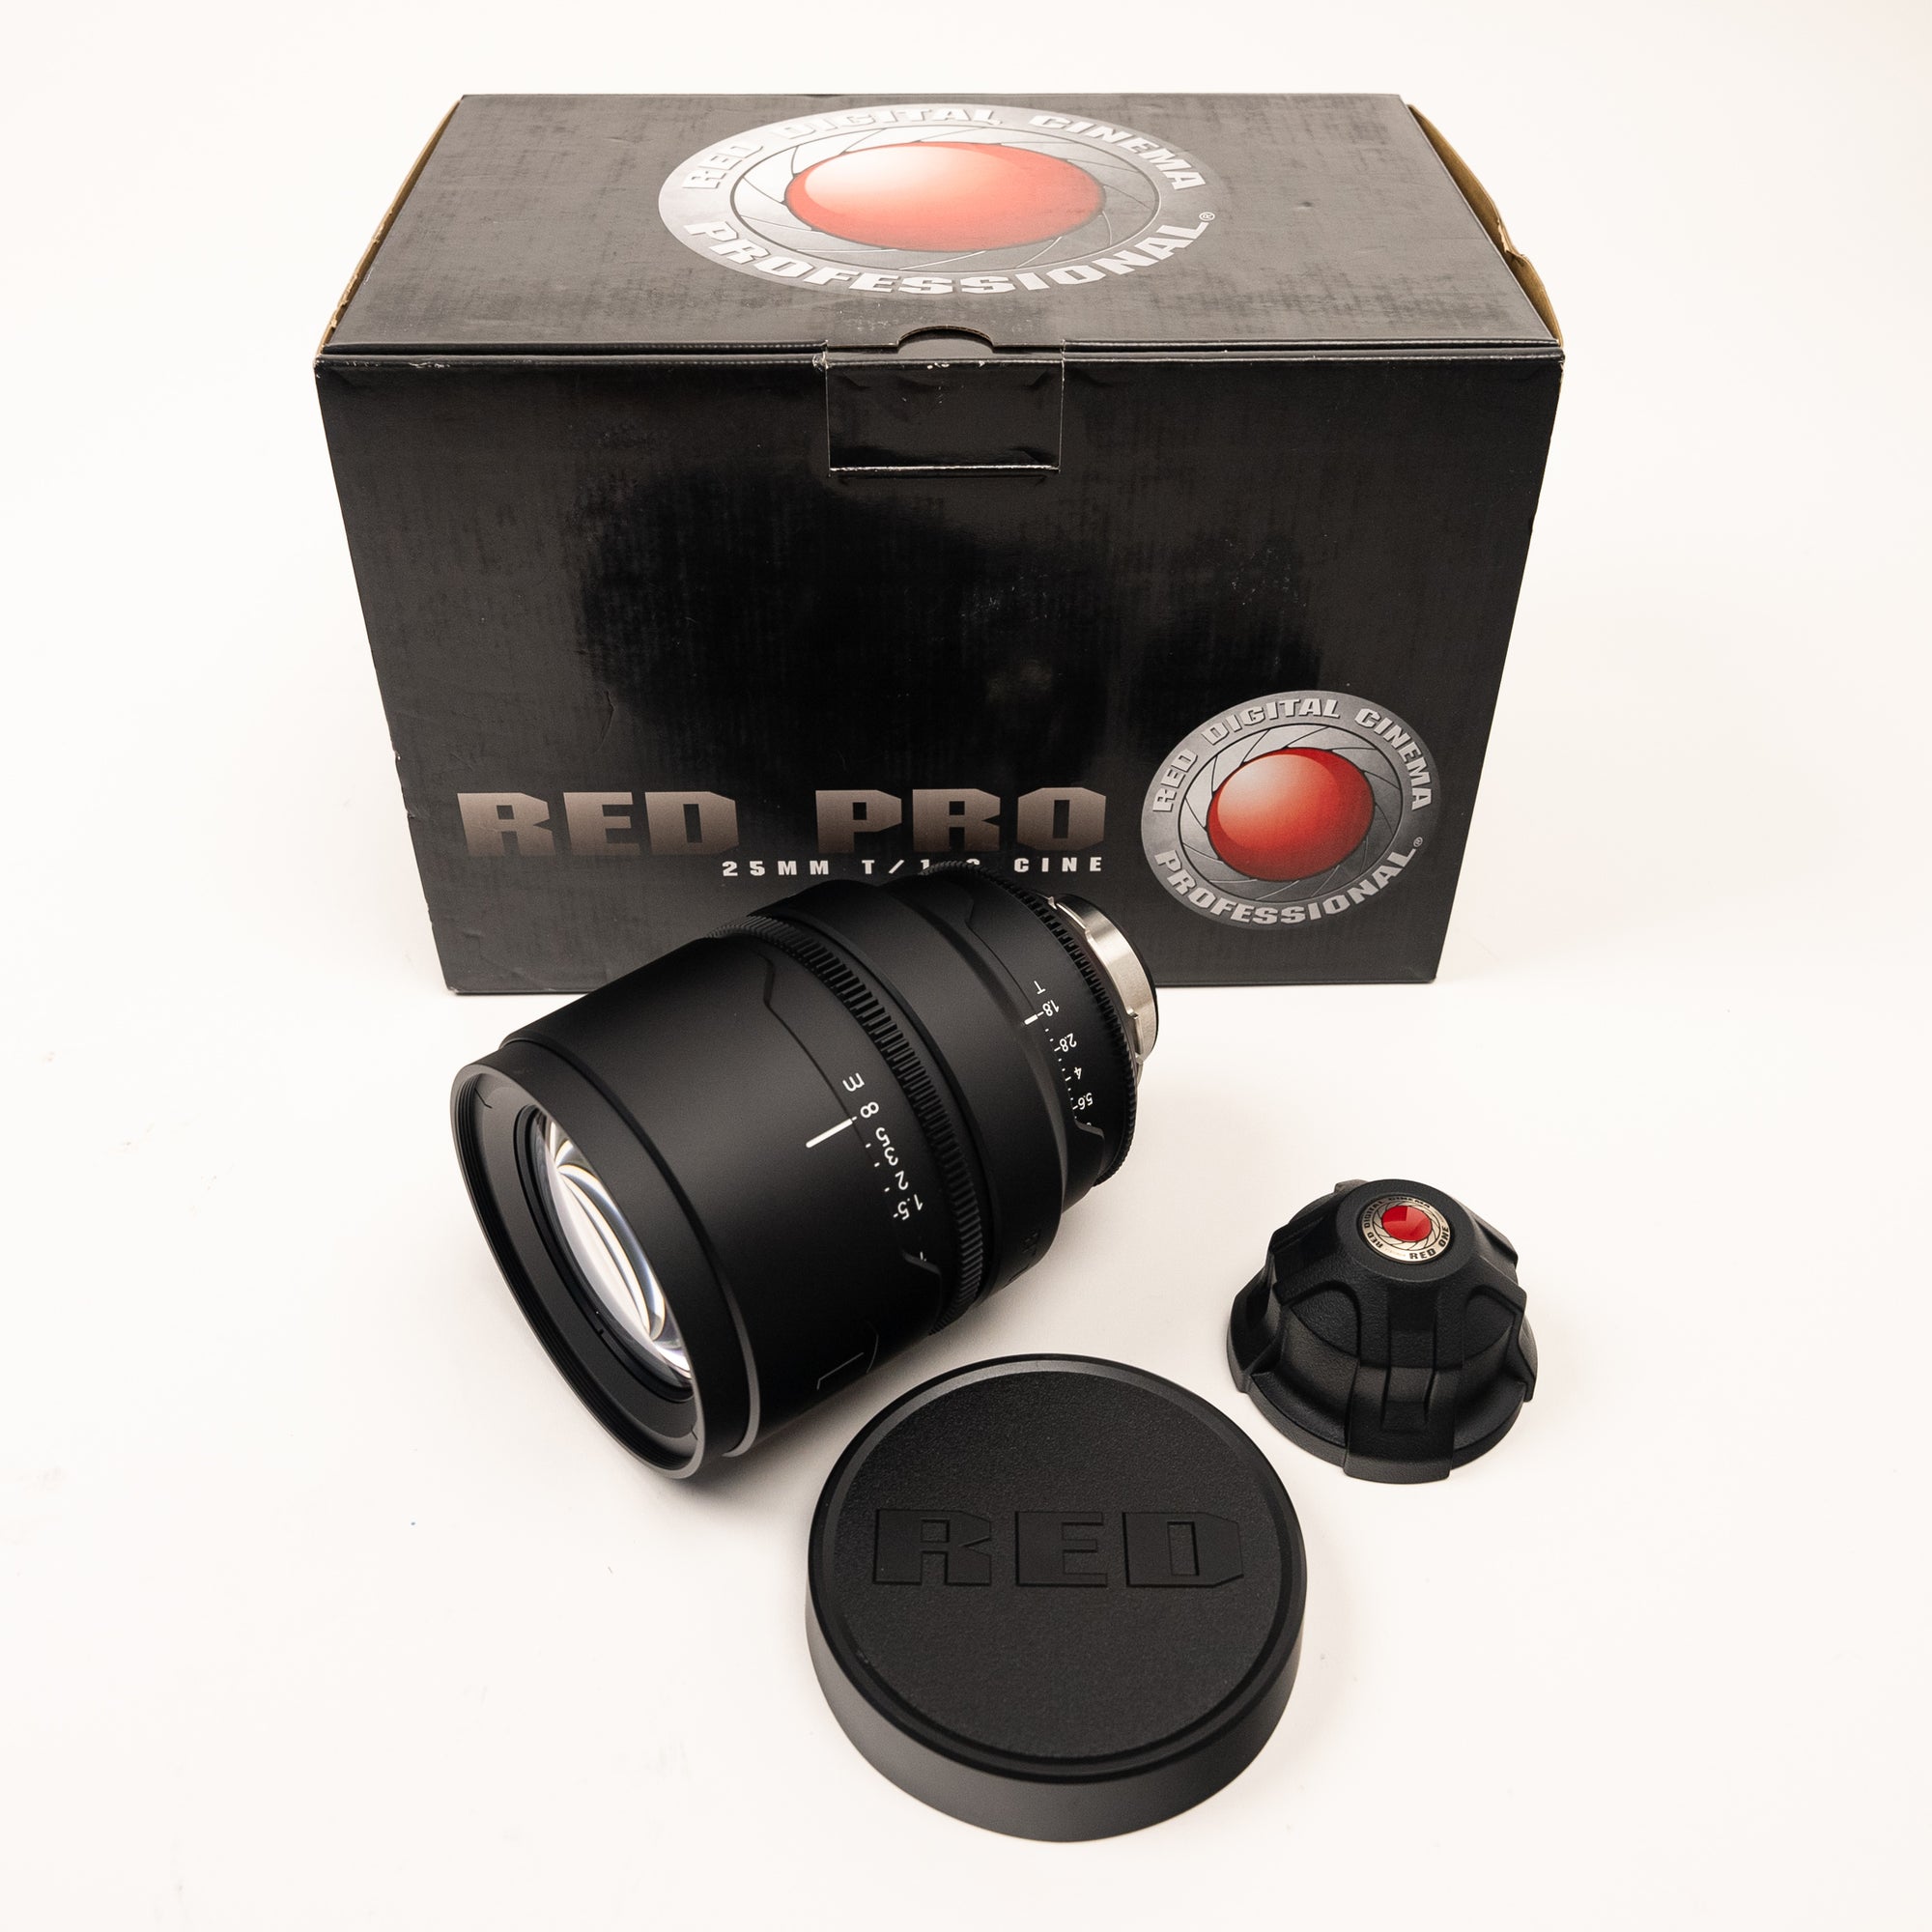 CinemaCameras.com - 6.1.22 - Photo - Selects (385 of 399) - RED Pro 25mm T:2.8 (Metrics).jpg